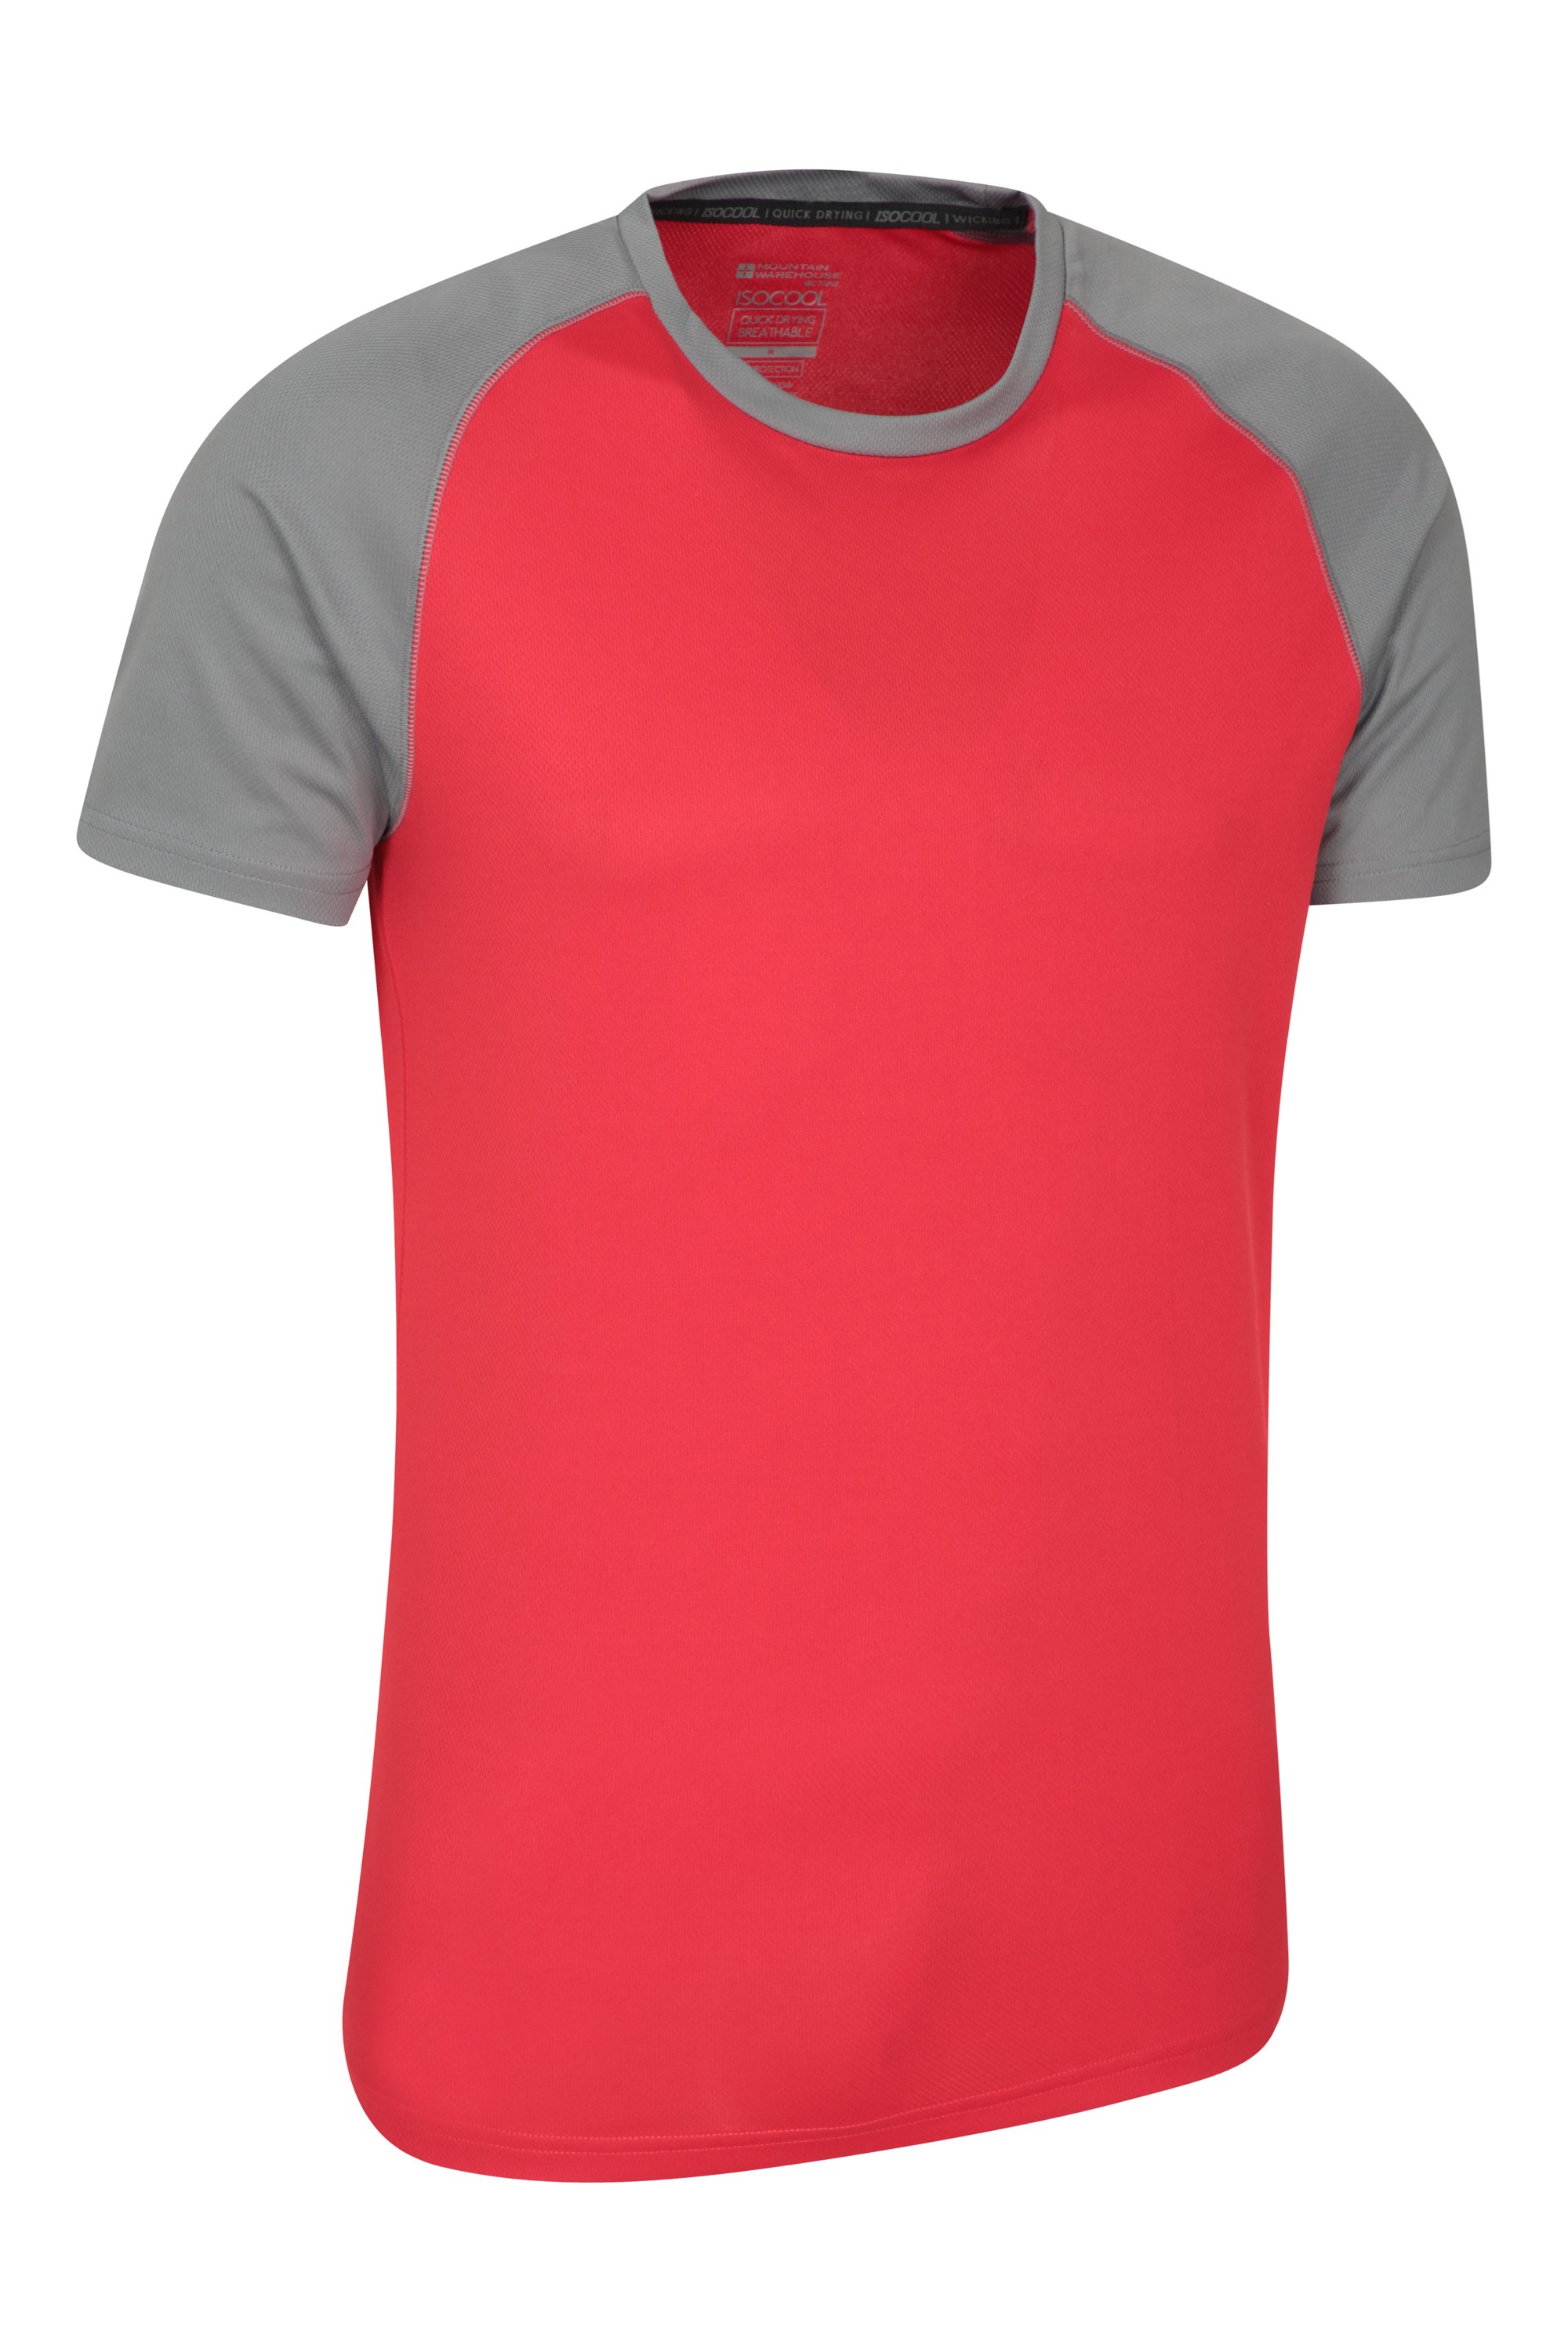 Mountain Warehouse Endurance gestreiftes T-Shirt für Herren UV-Schutz-T-Shirt 